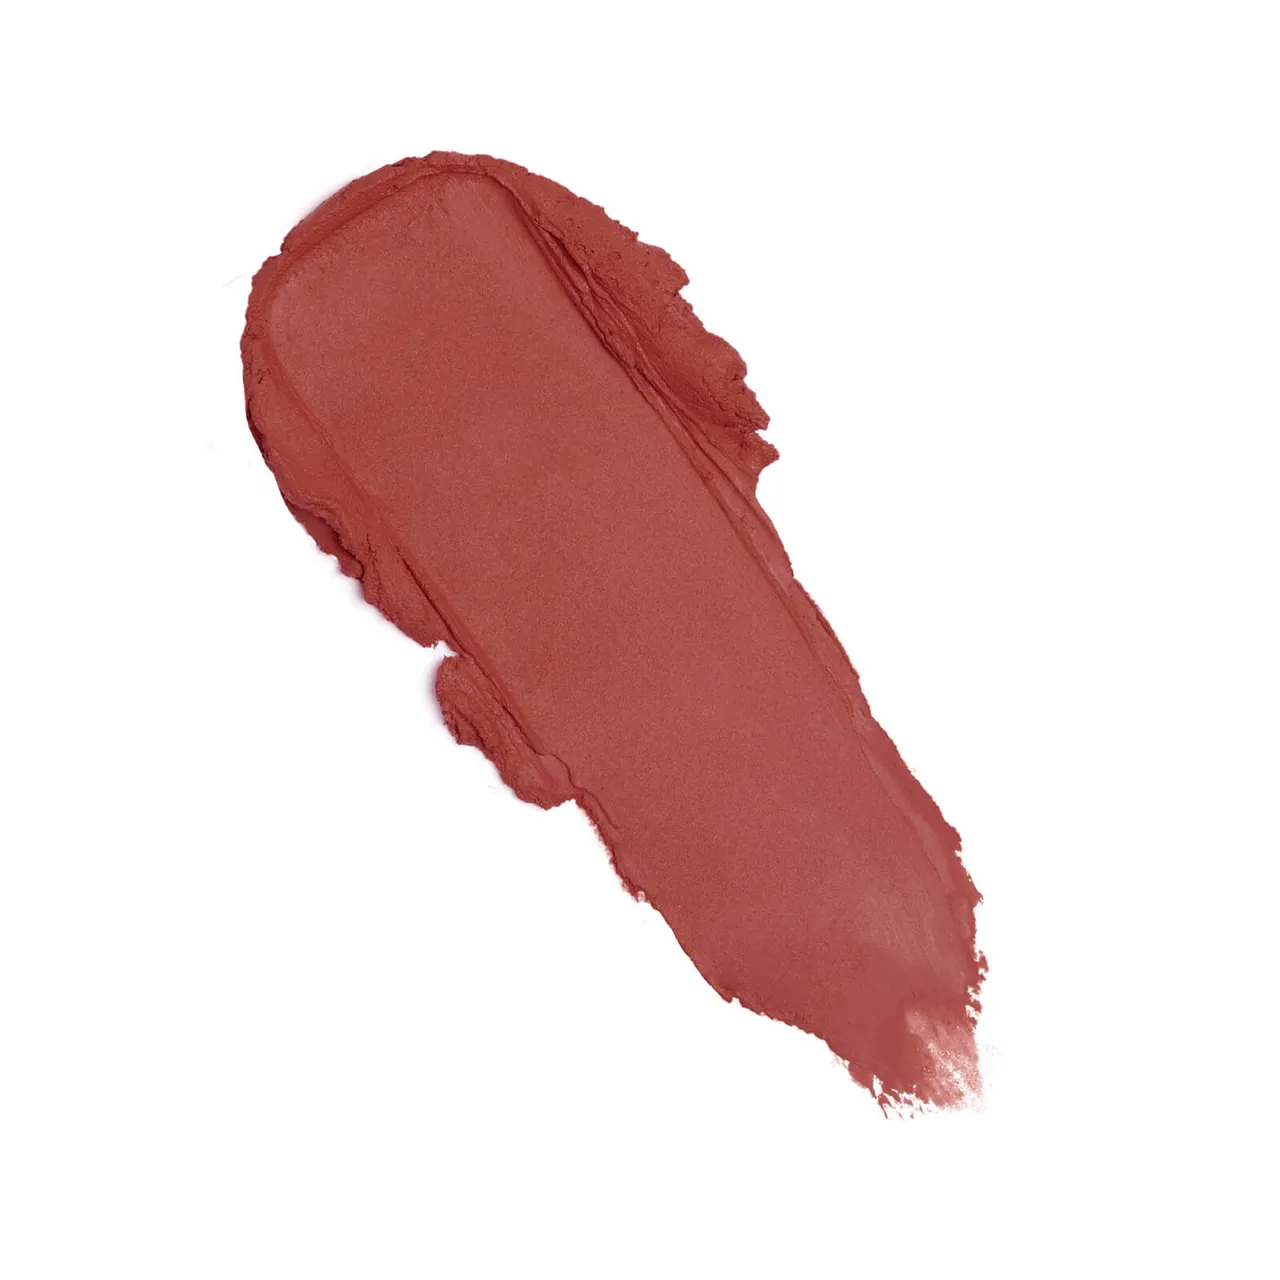 Makeup Revolution Lip Allure Soft Satin Lipstick 50g (Various Shades) - Wifey Dusky Pink